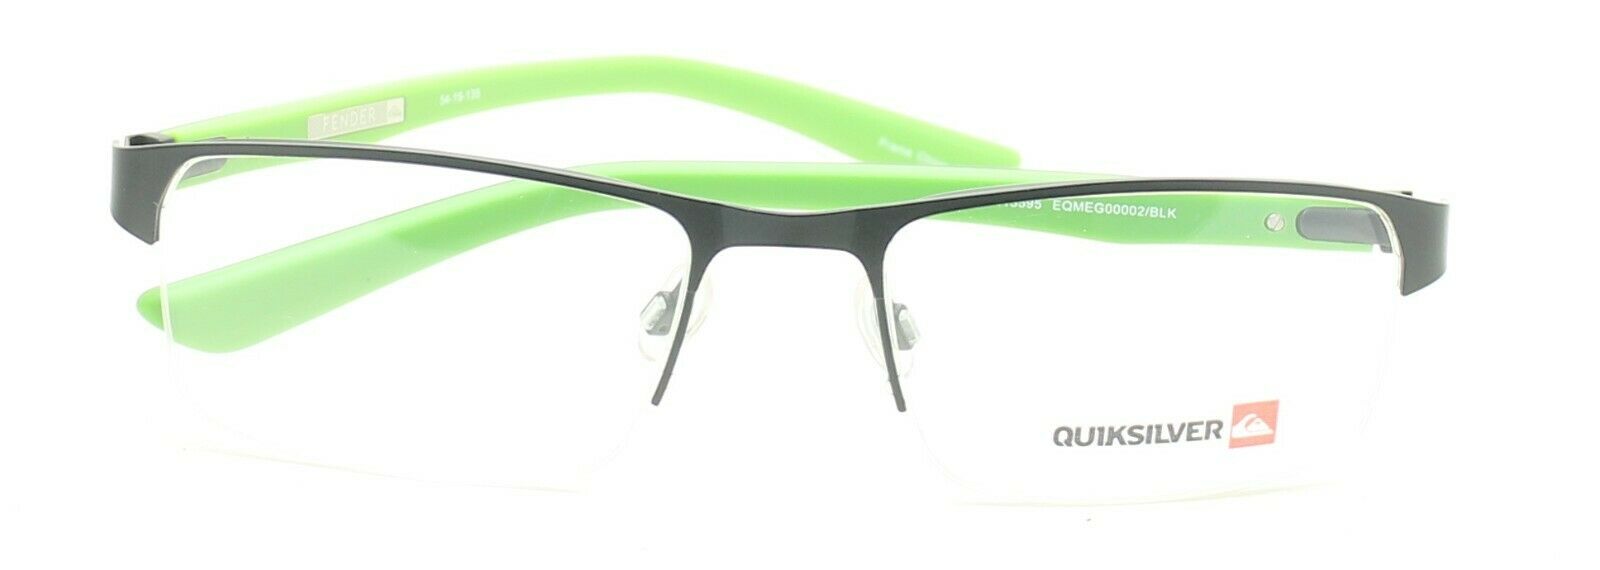 QUIKSILVER QS Fender EQMEG 54mm RX Optical FRAMES Glasses Eyewear Eyeglasses New